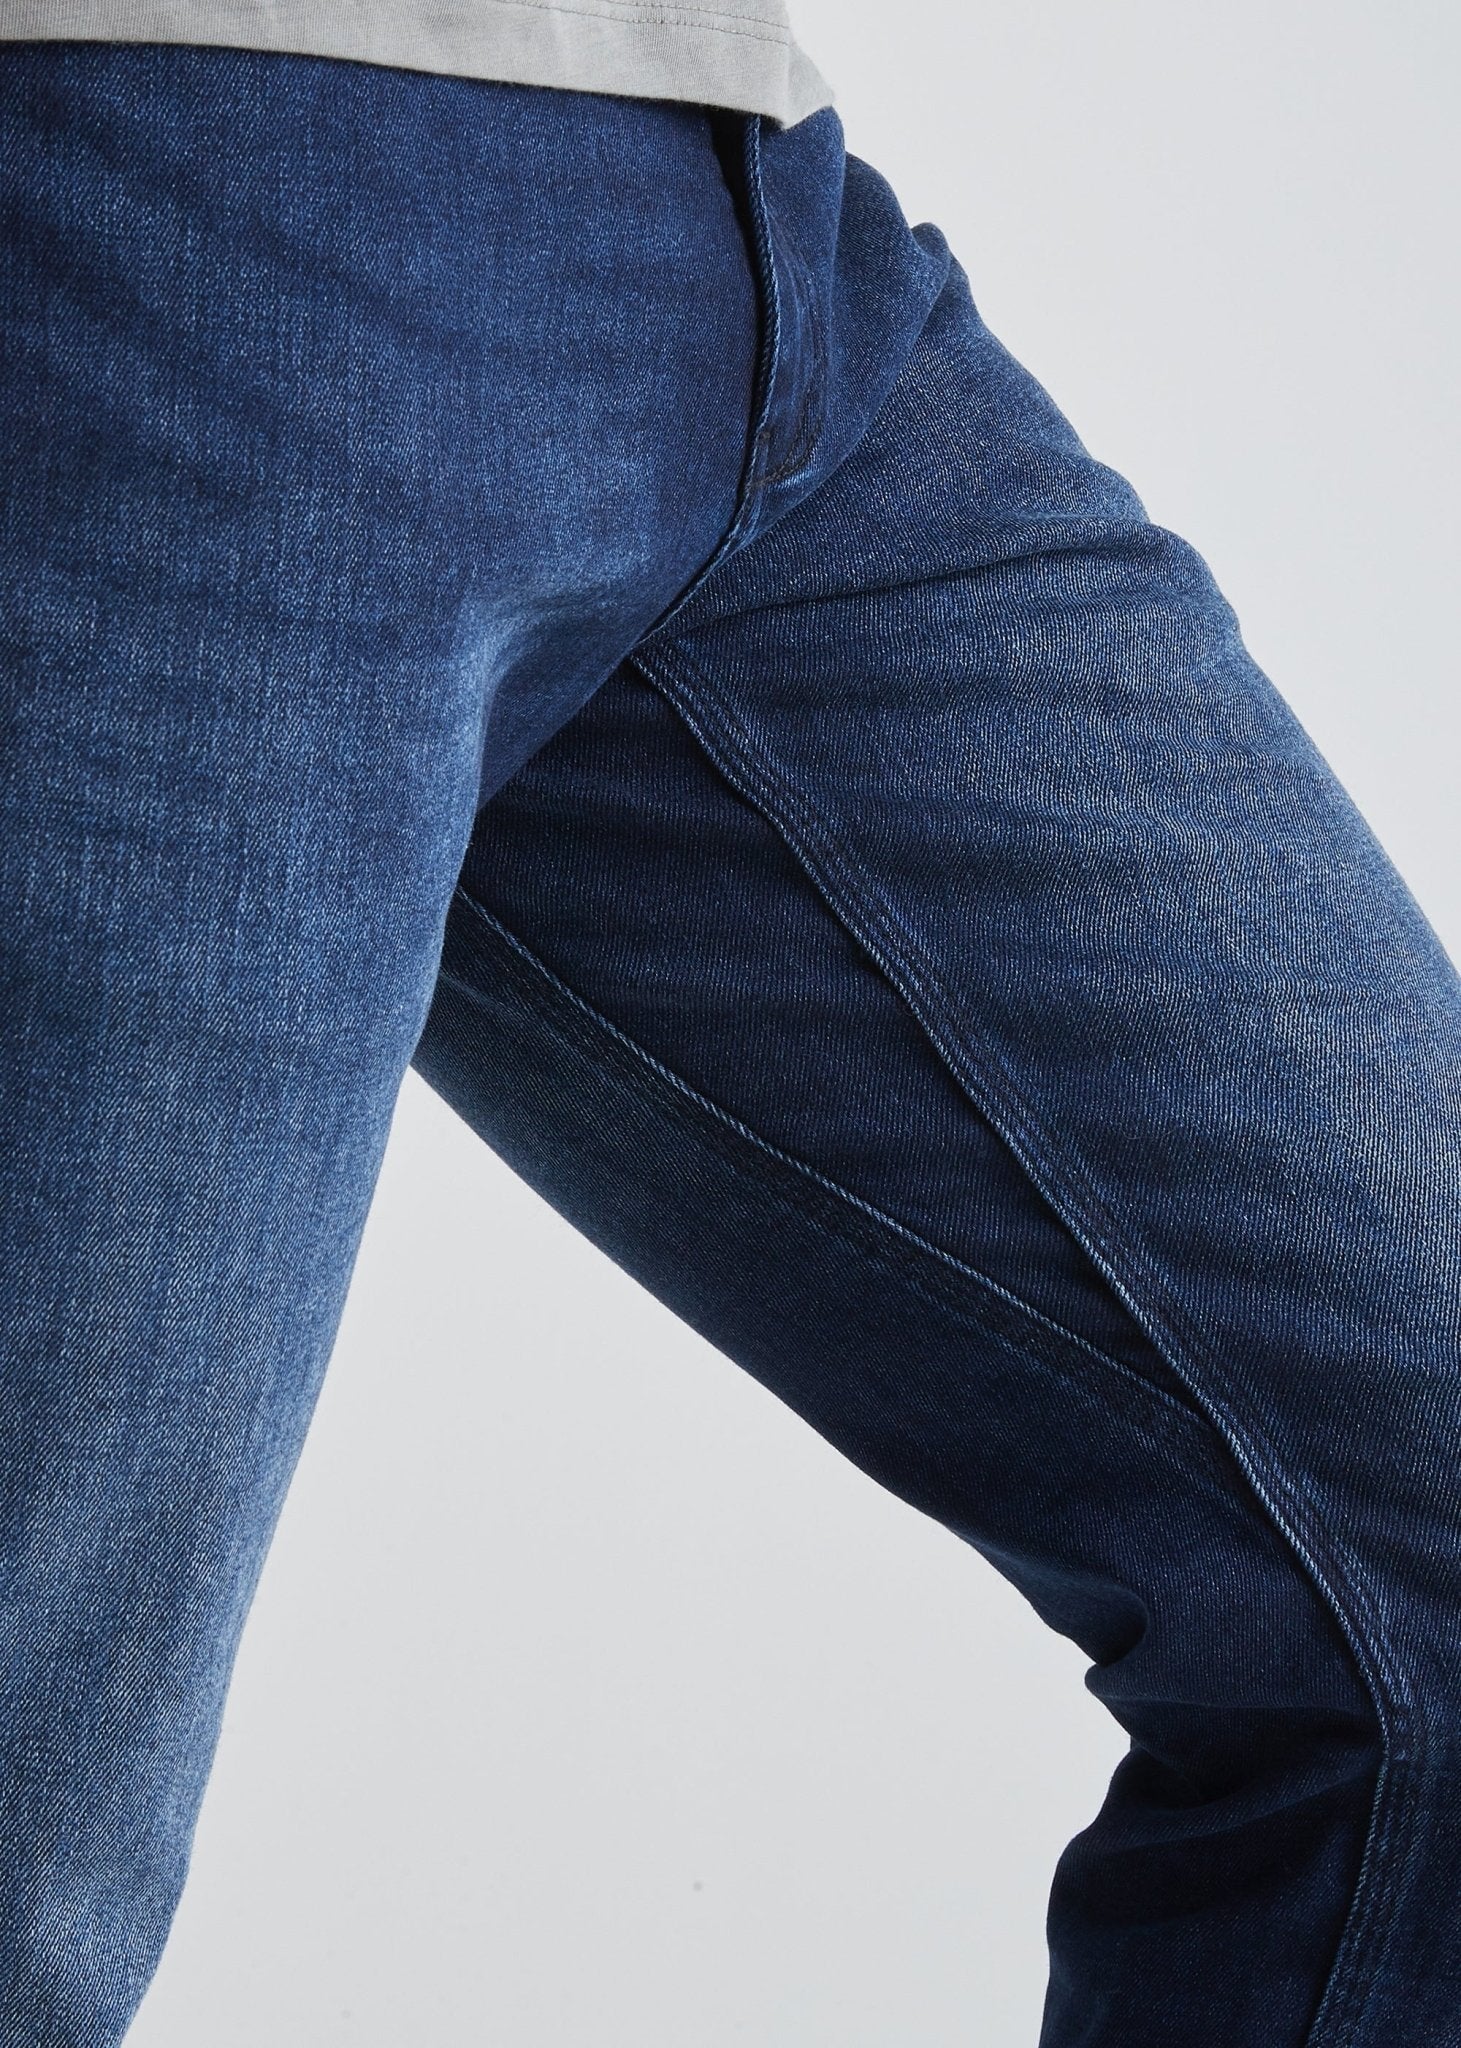 Men\'s Slim Fit Water Resistant Jeans Stretch